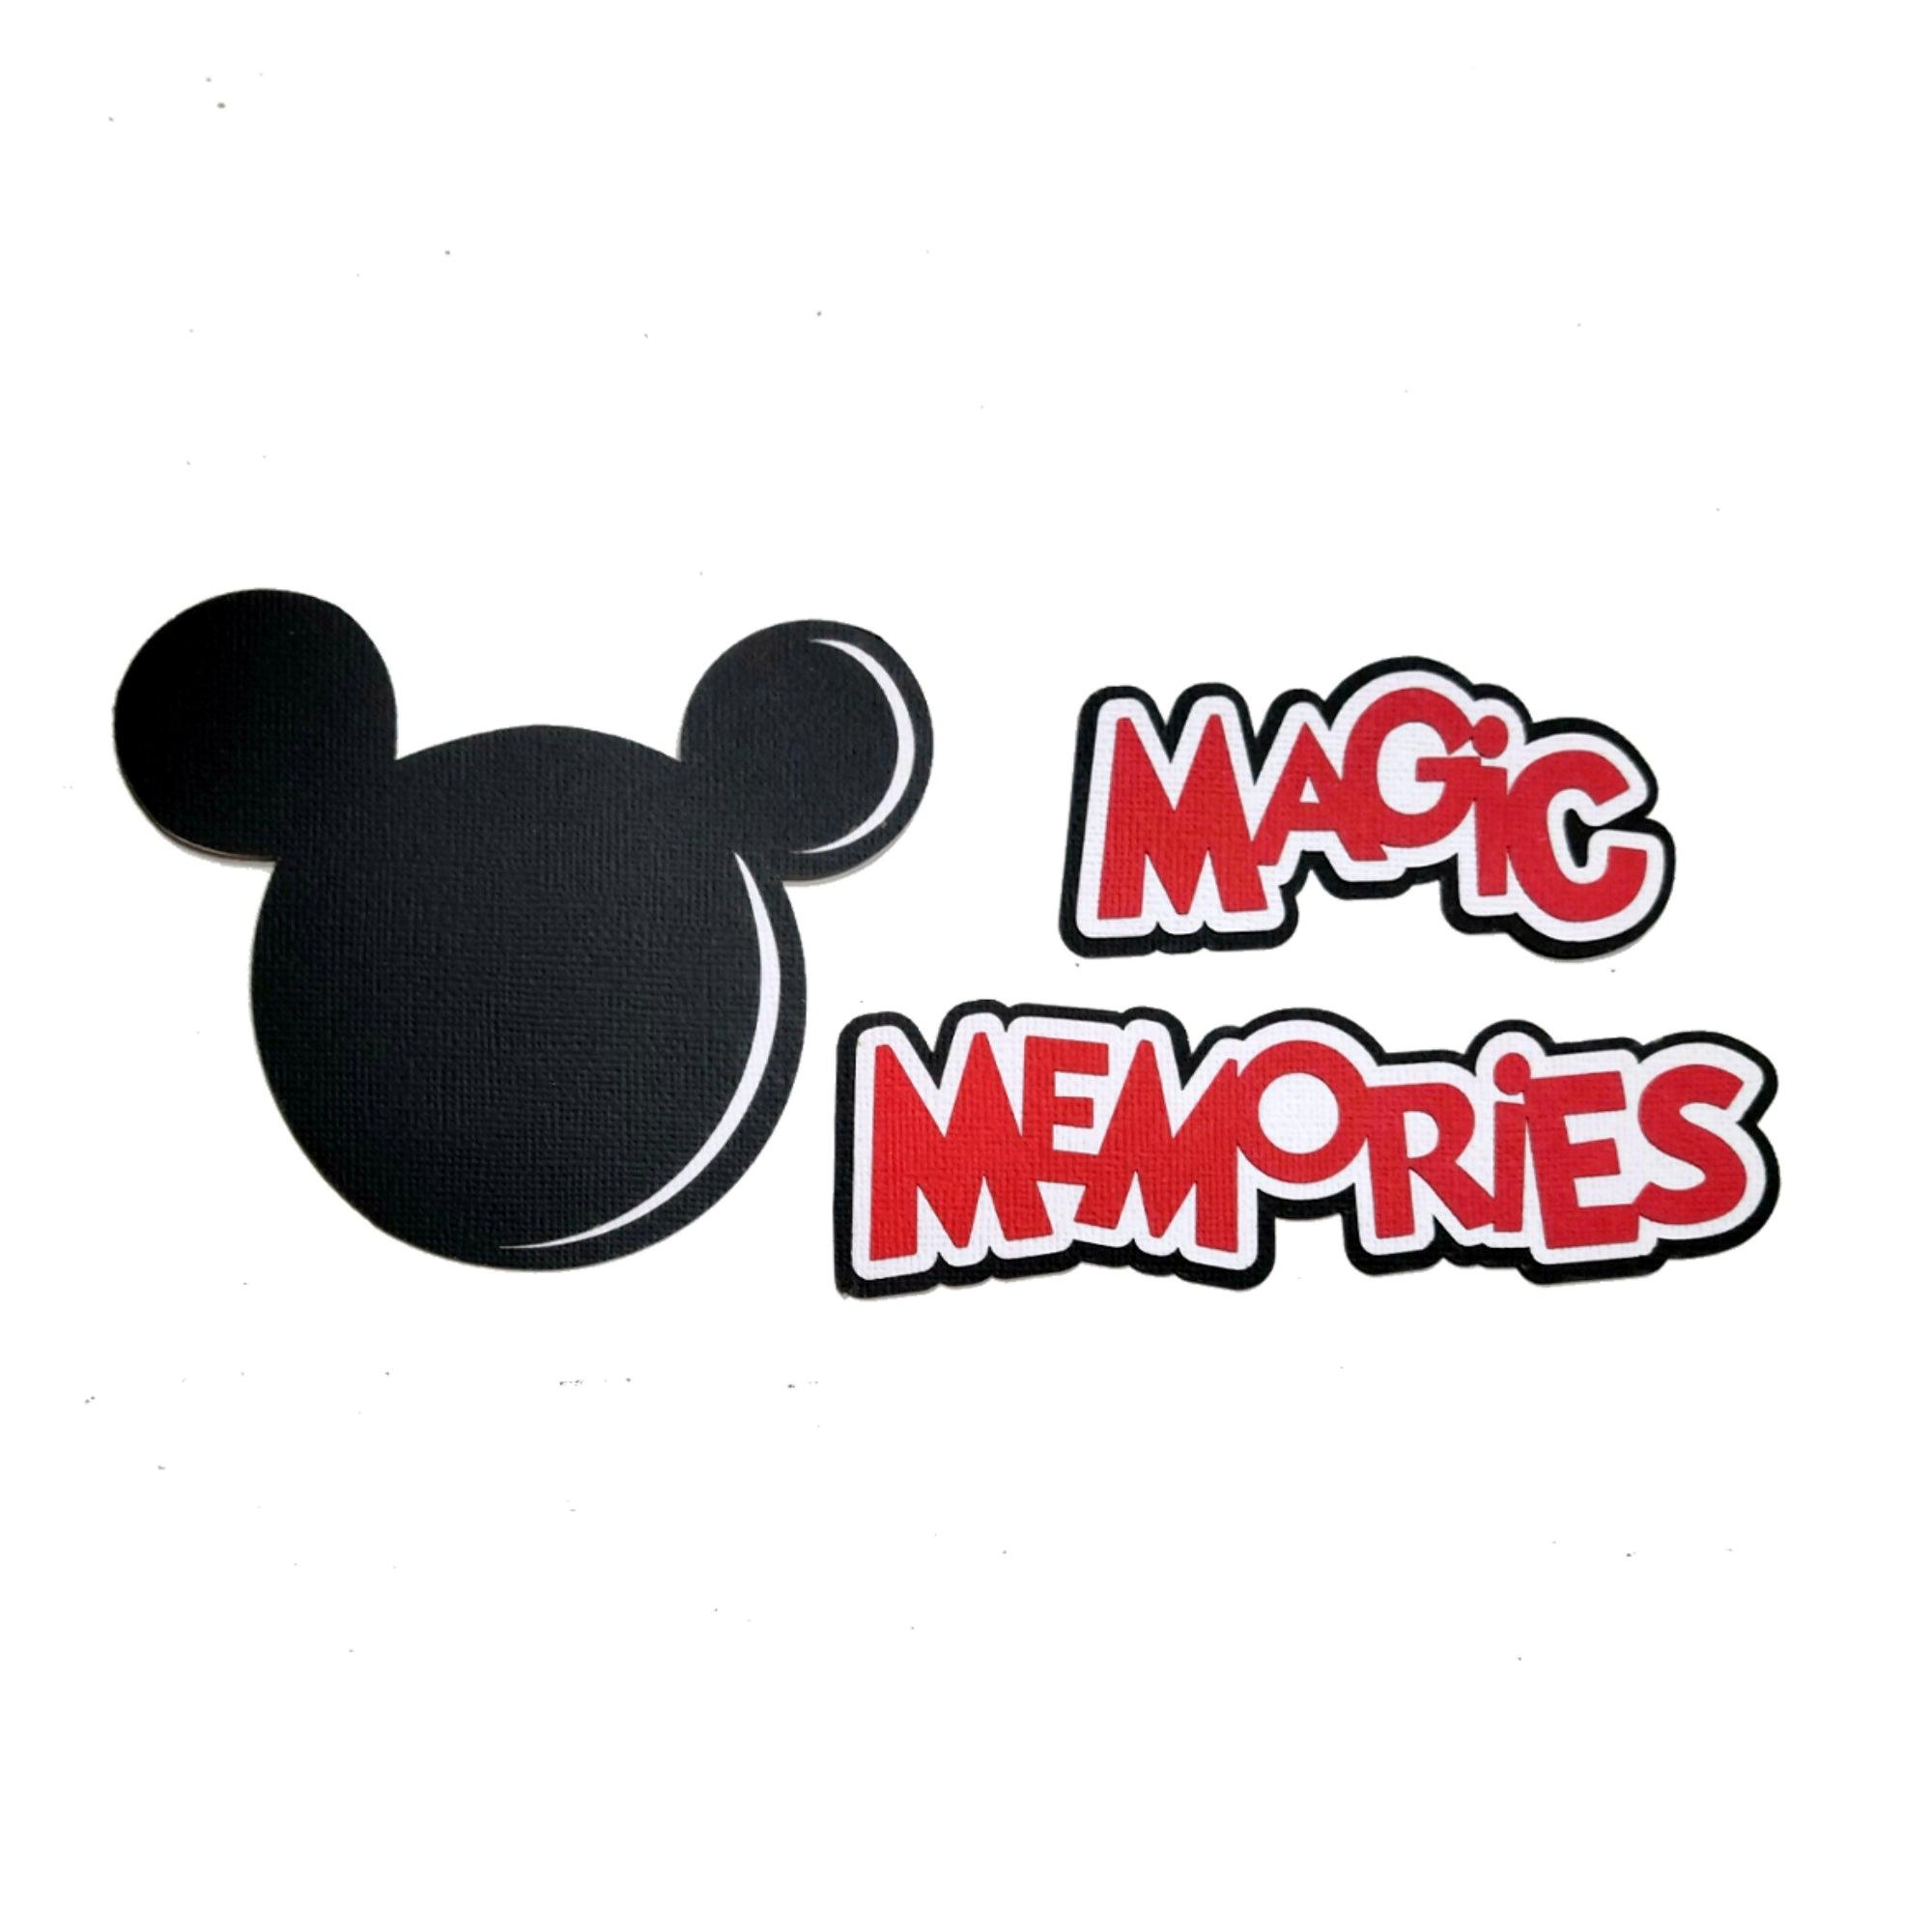 Disneyana Title & Icon Magic Memories Fully-Assembled Laser Cut Scrapbook Embellishment by SSC Laser Designs